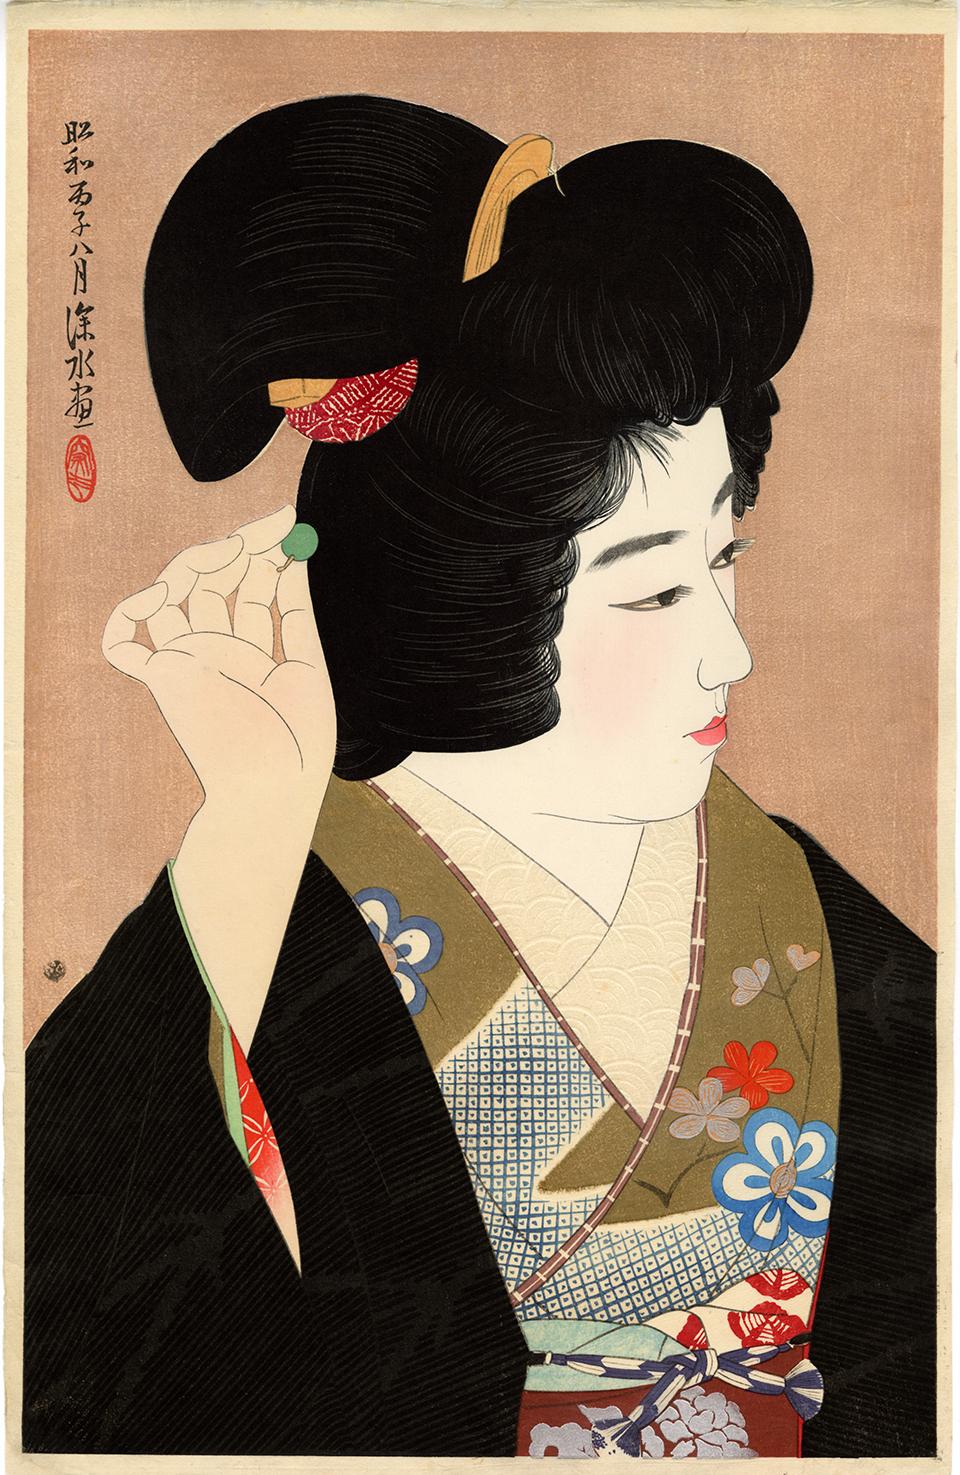 Ito Shinsui Figurative Print – Pupil of the Eye; Japanese Beauty in Kimono